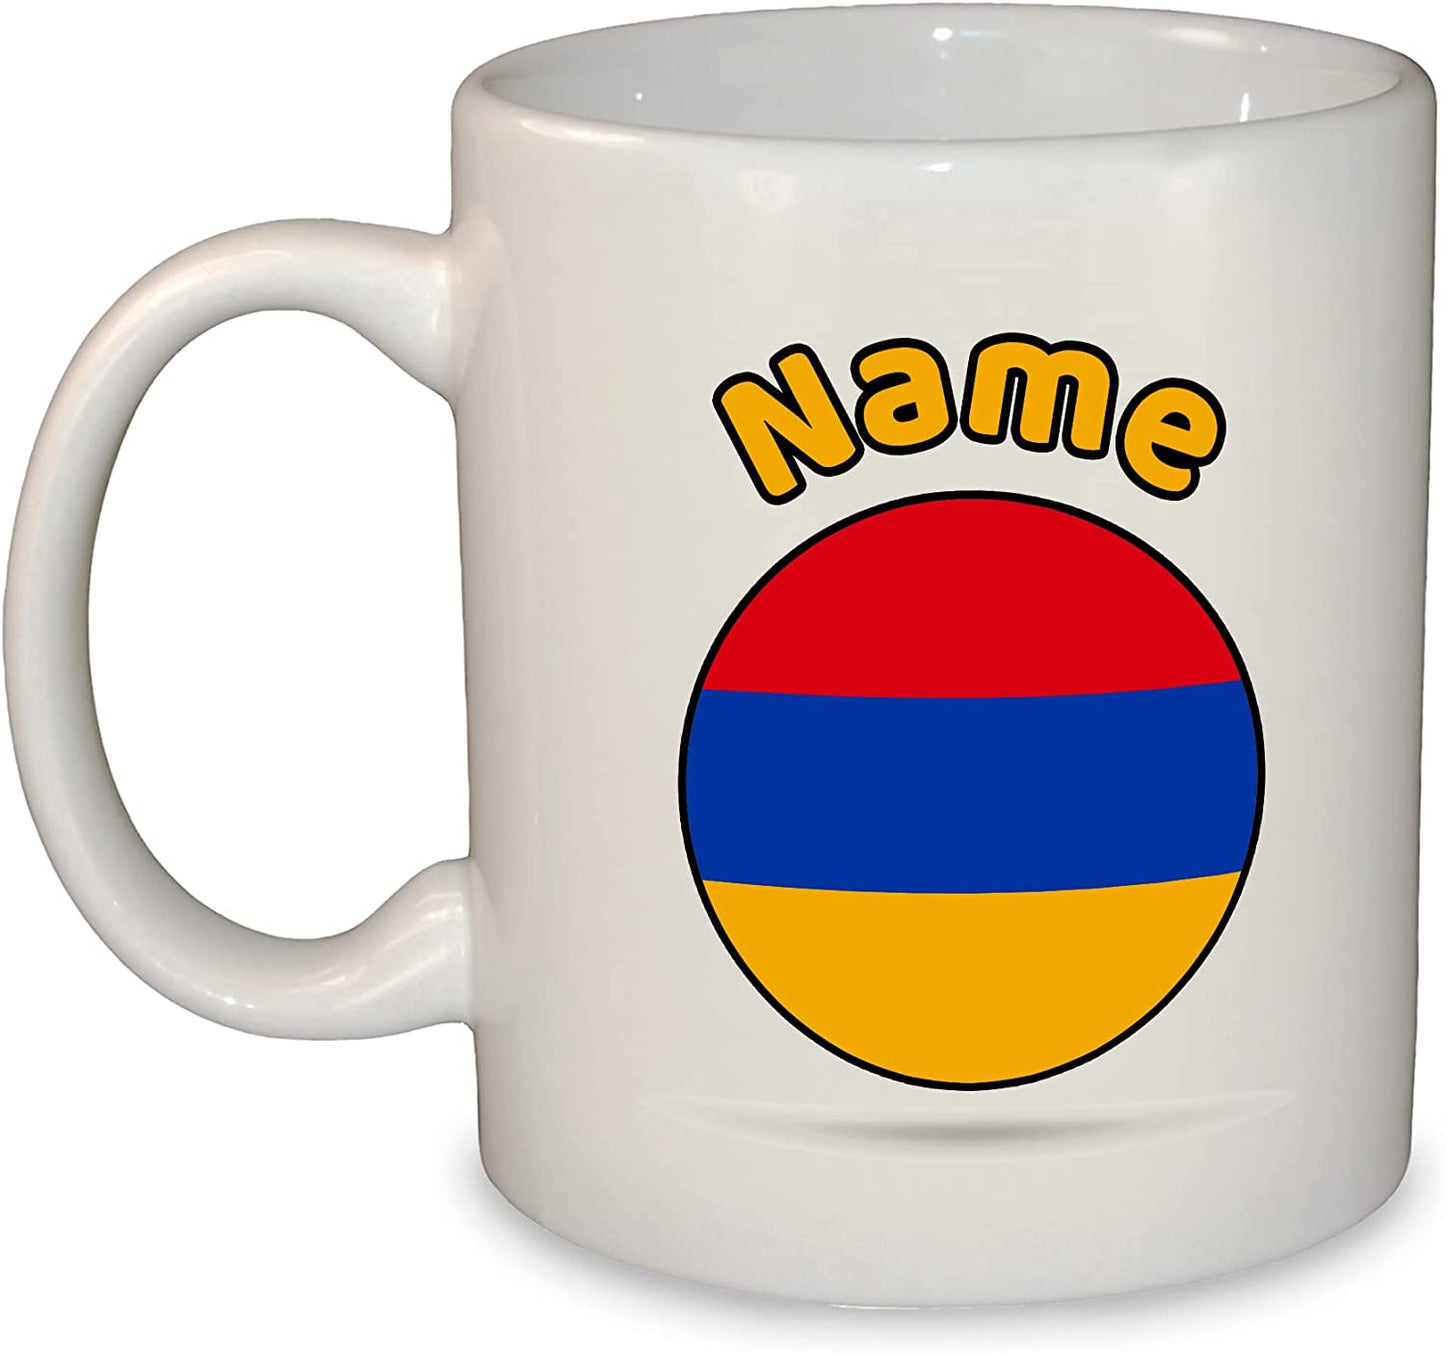 European Round Flag Mug - Choose from 25 countries